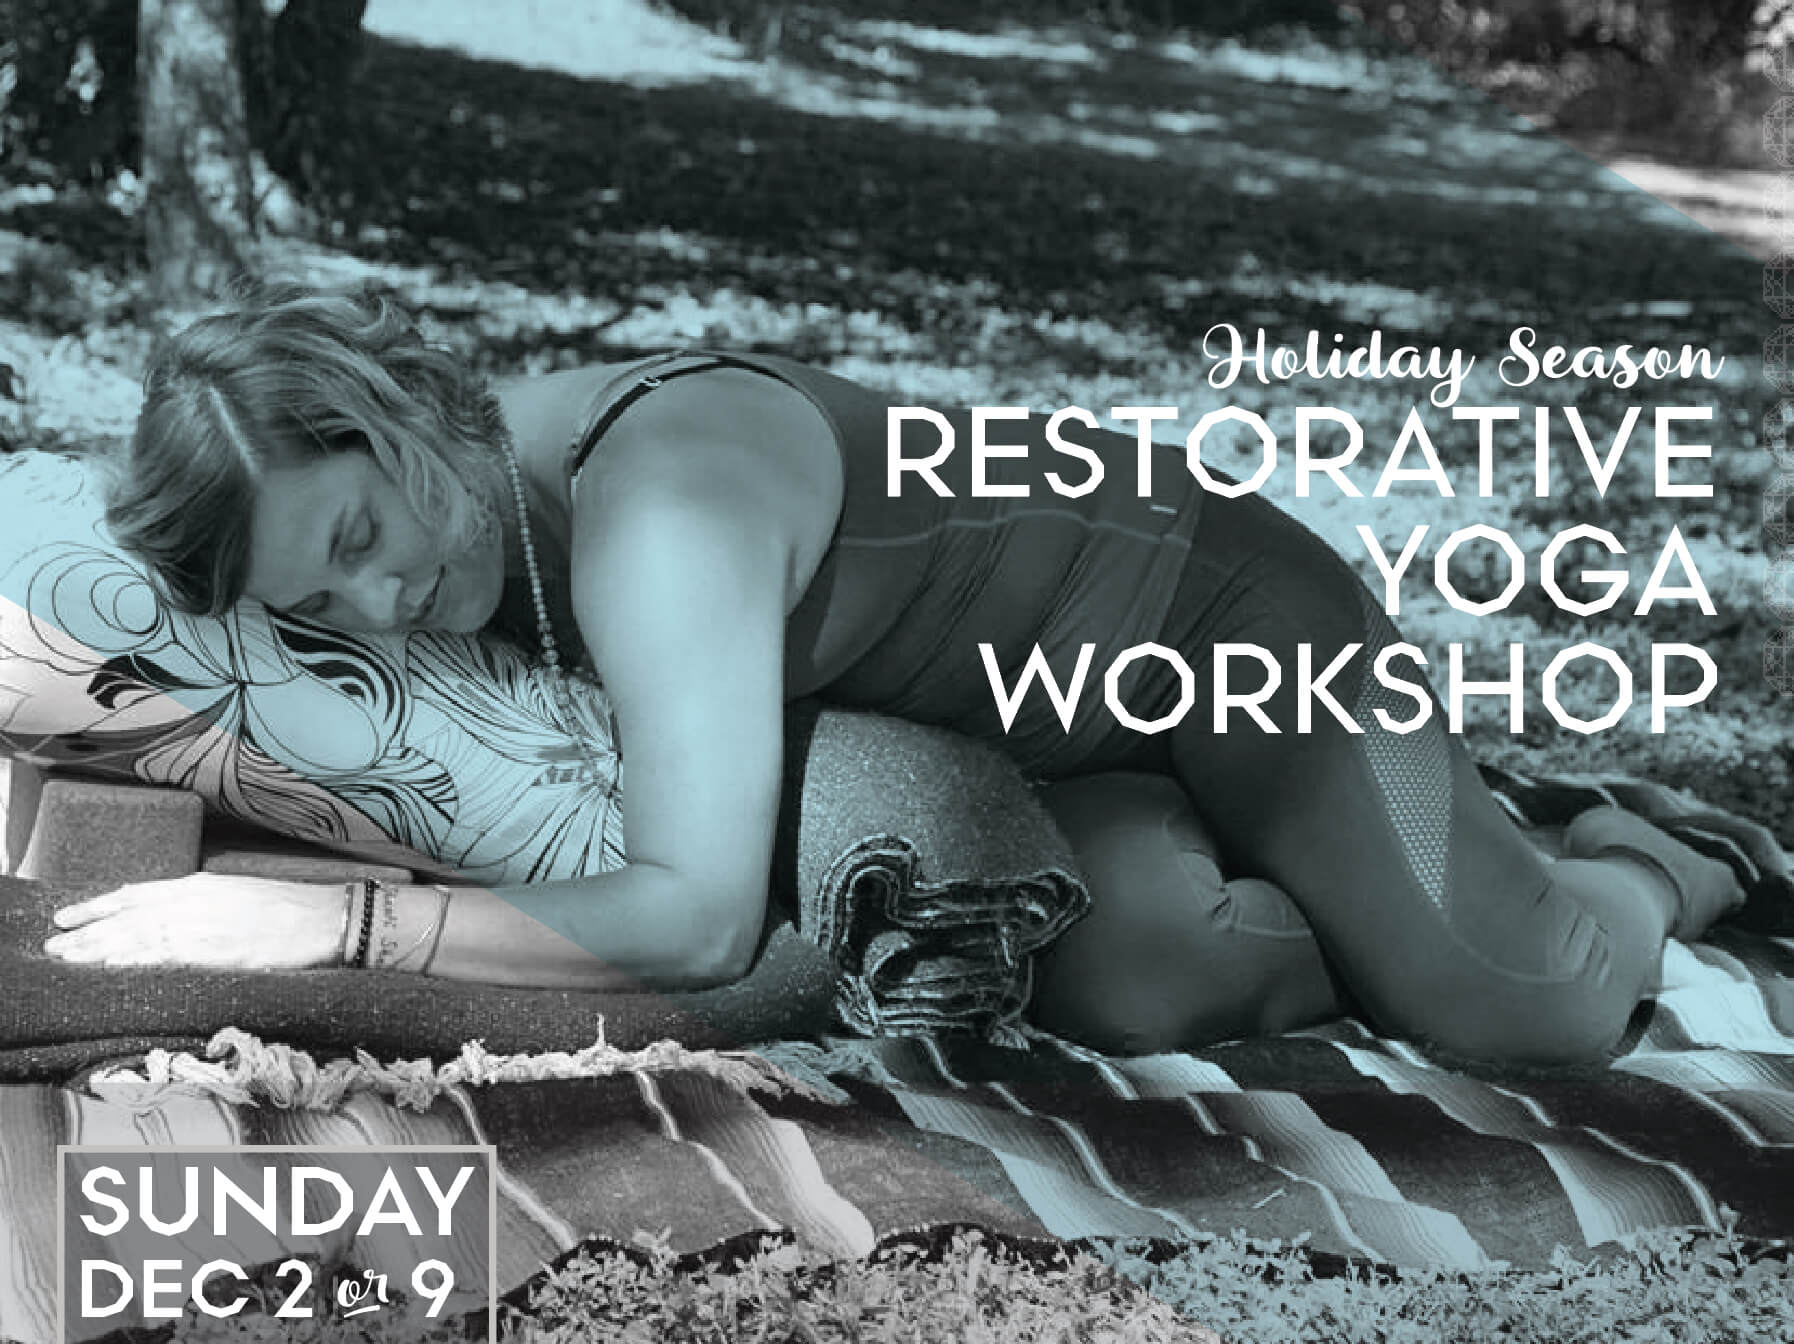 Restorative Yoga Workshop: Holiday Season